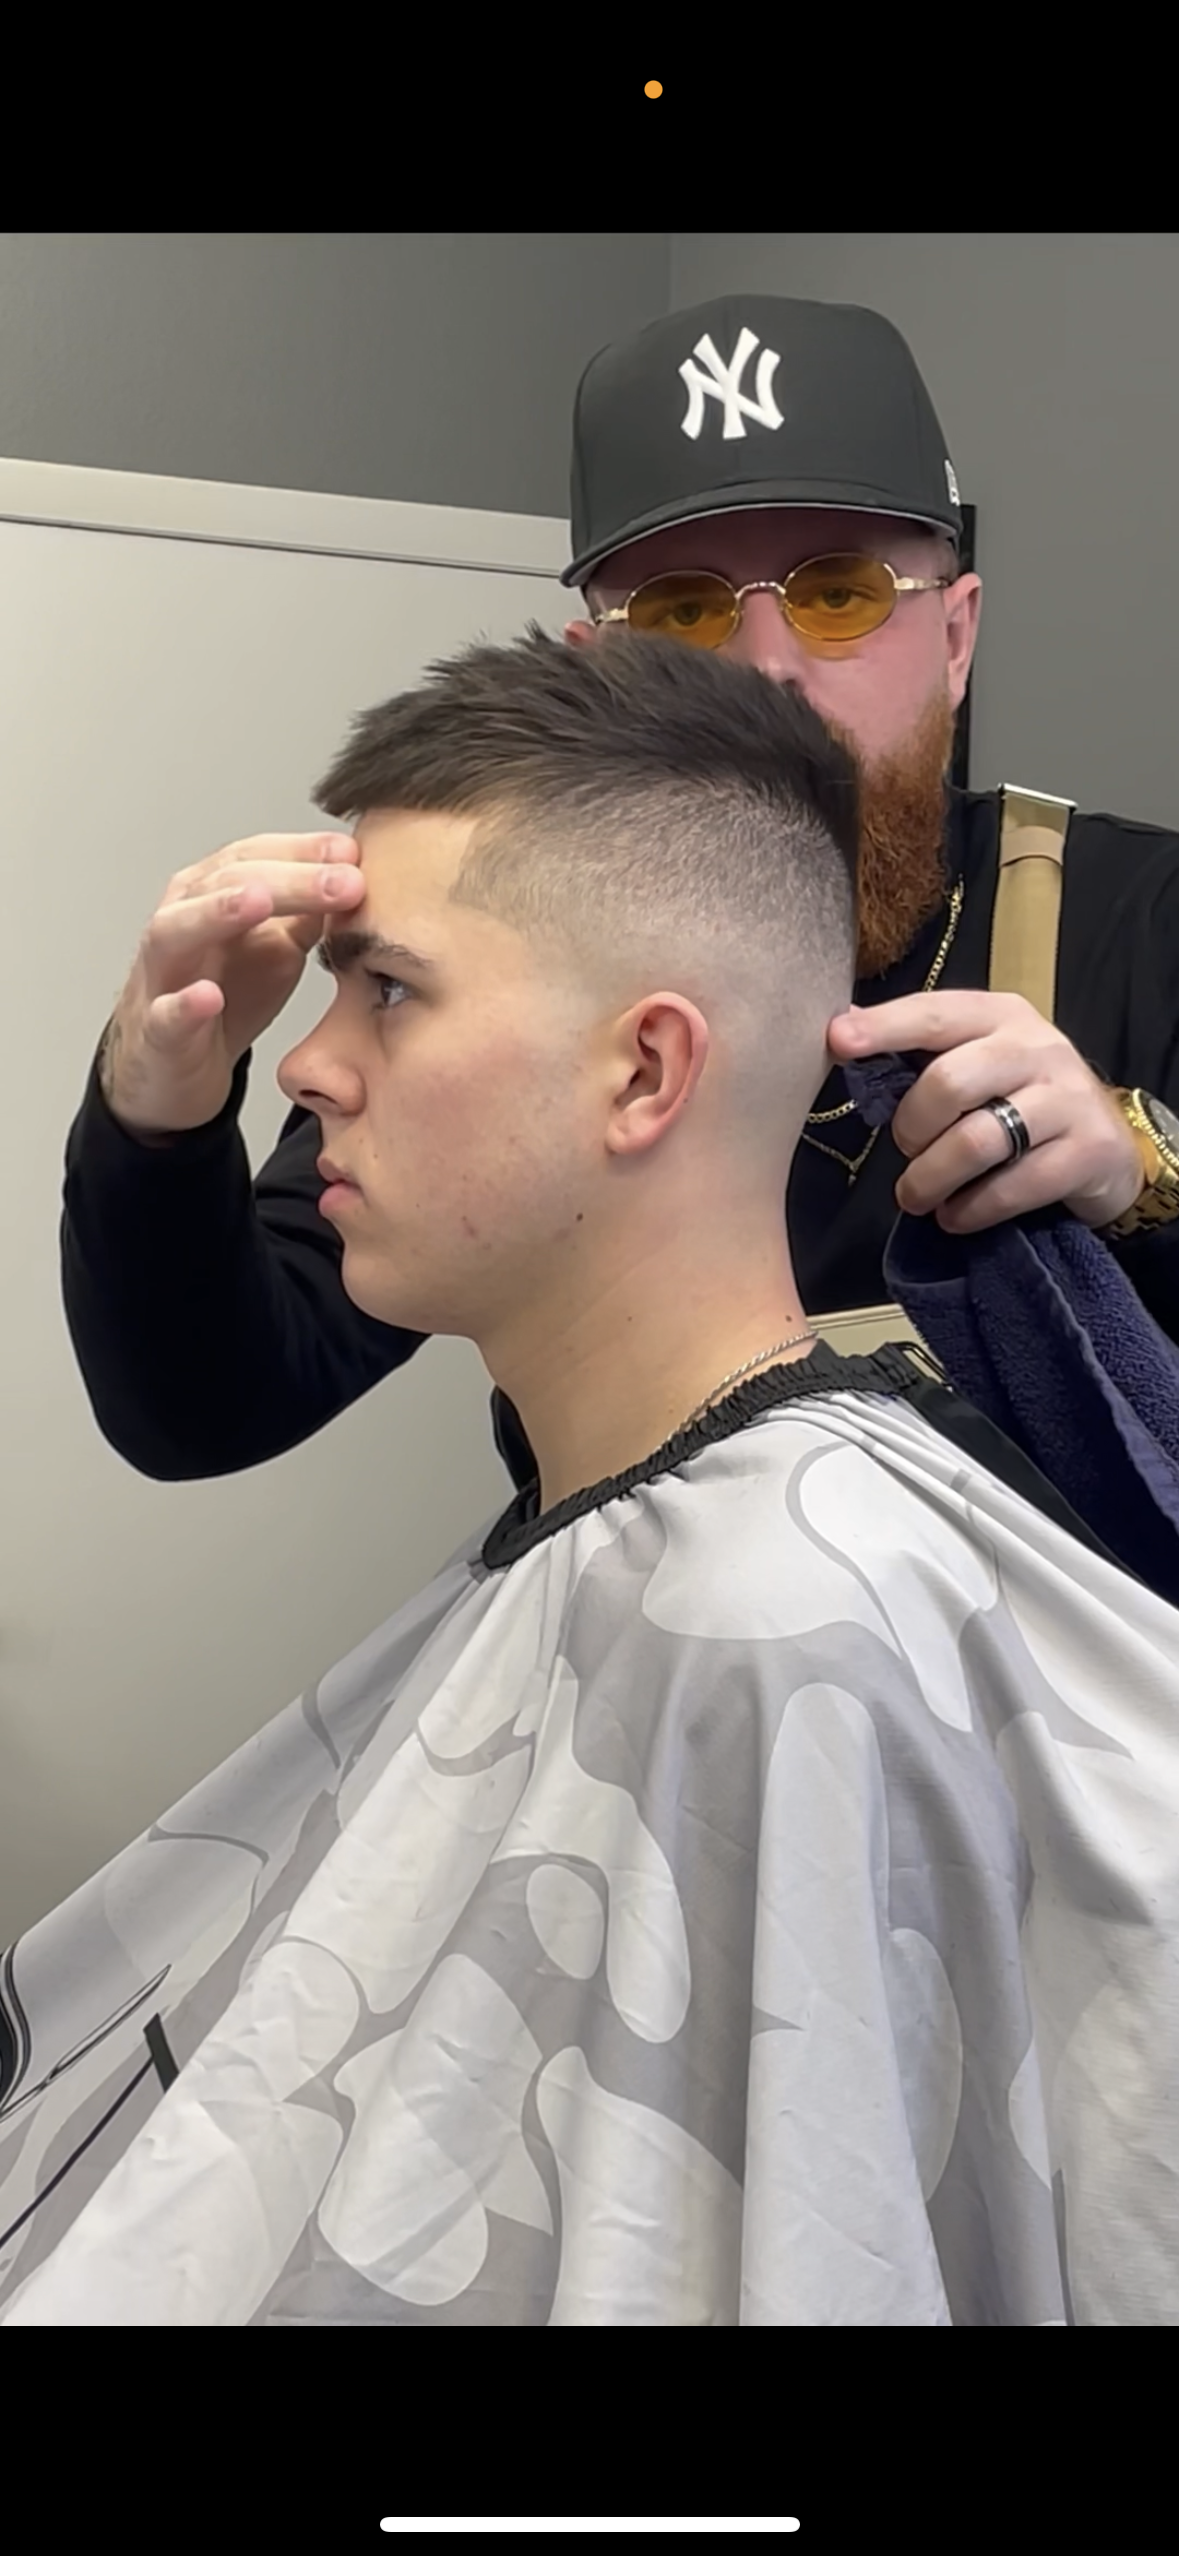 Men's Haircut - Fade at Barbershop - Whos Your Barber in Venice Florida